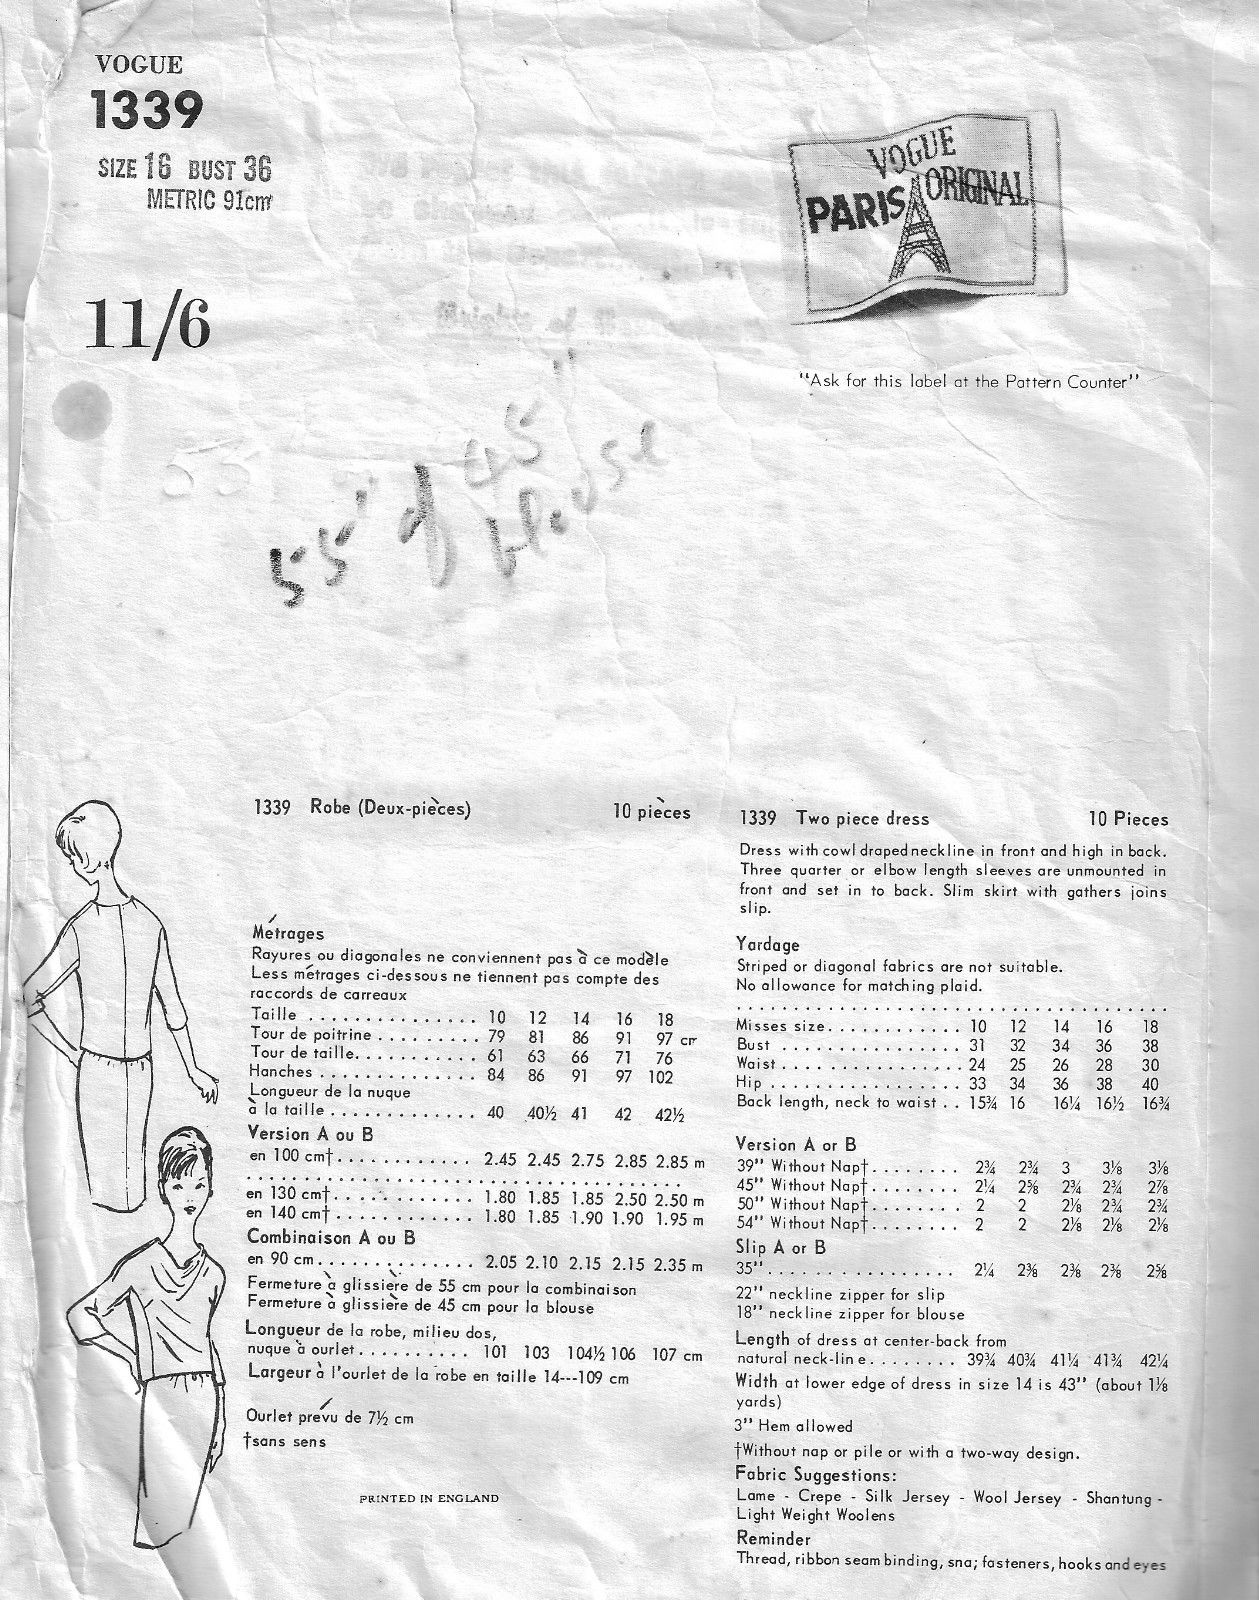 Vogue Paris Original Two Piece Dress Pattern by Guy Laroche---Vogue 1339---Size 14  Bust 34